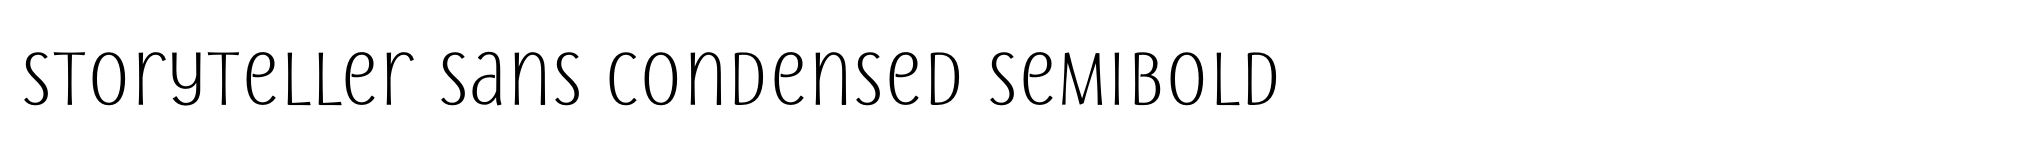 Storyteller Sans Condensed Semibold image